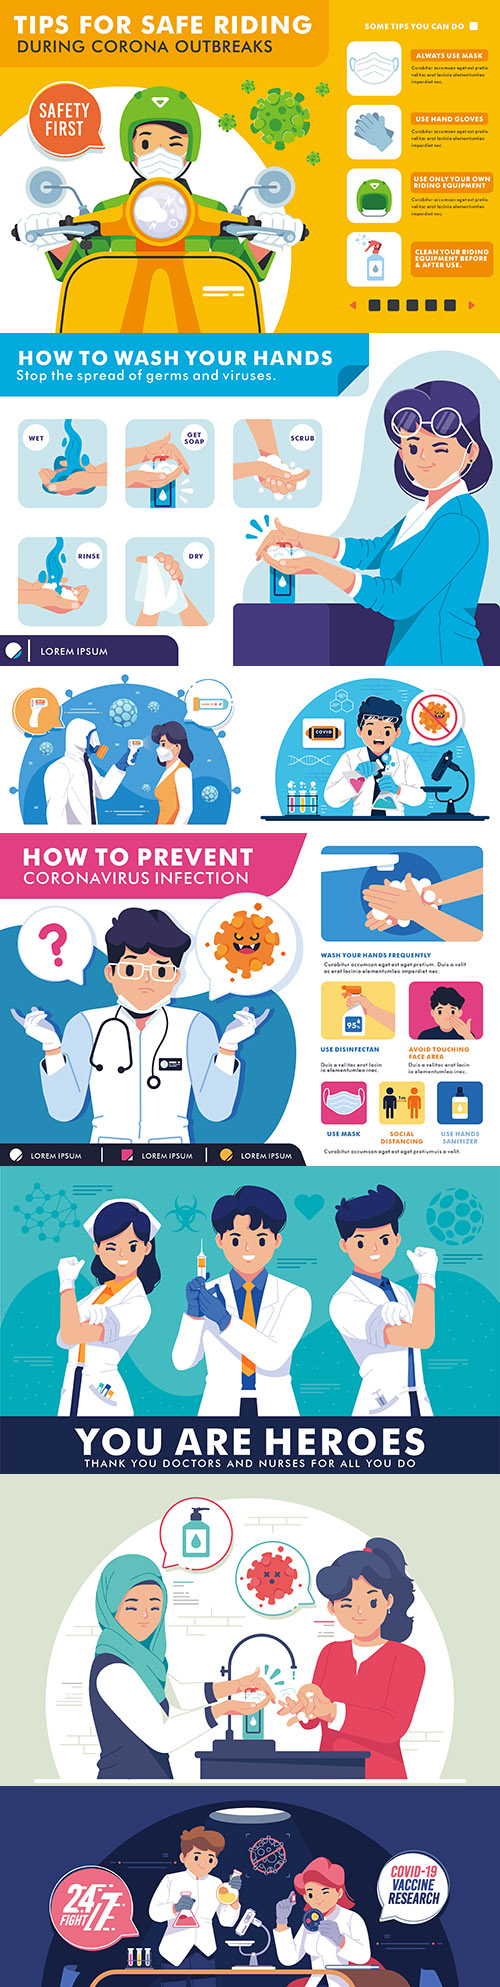 Hand disinfectant and coronivirus prevention illustration
